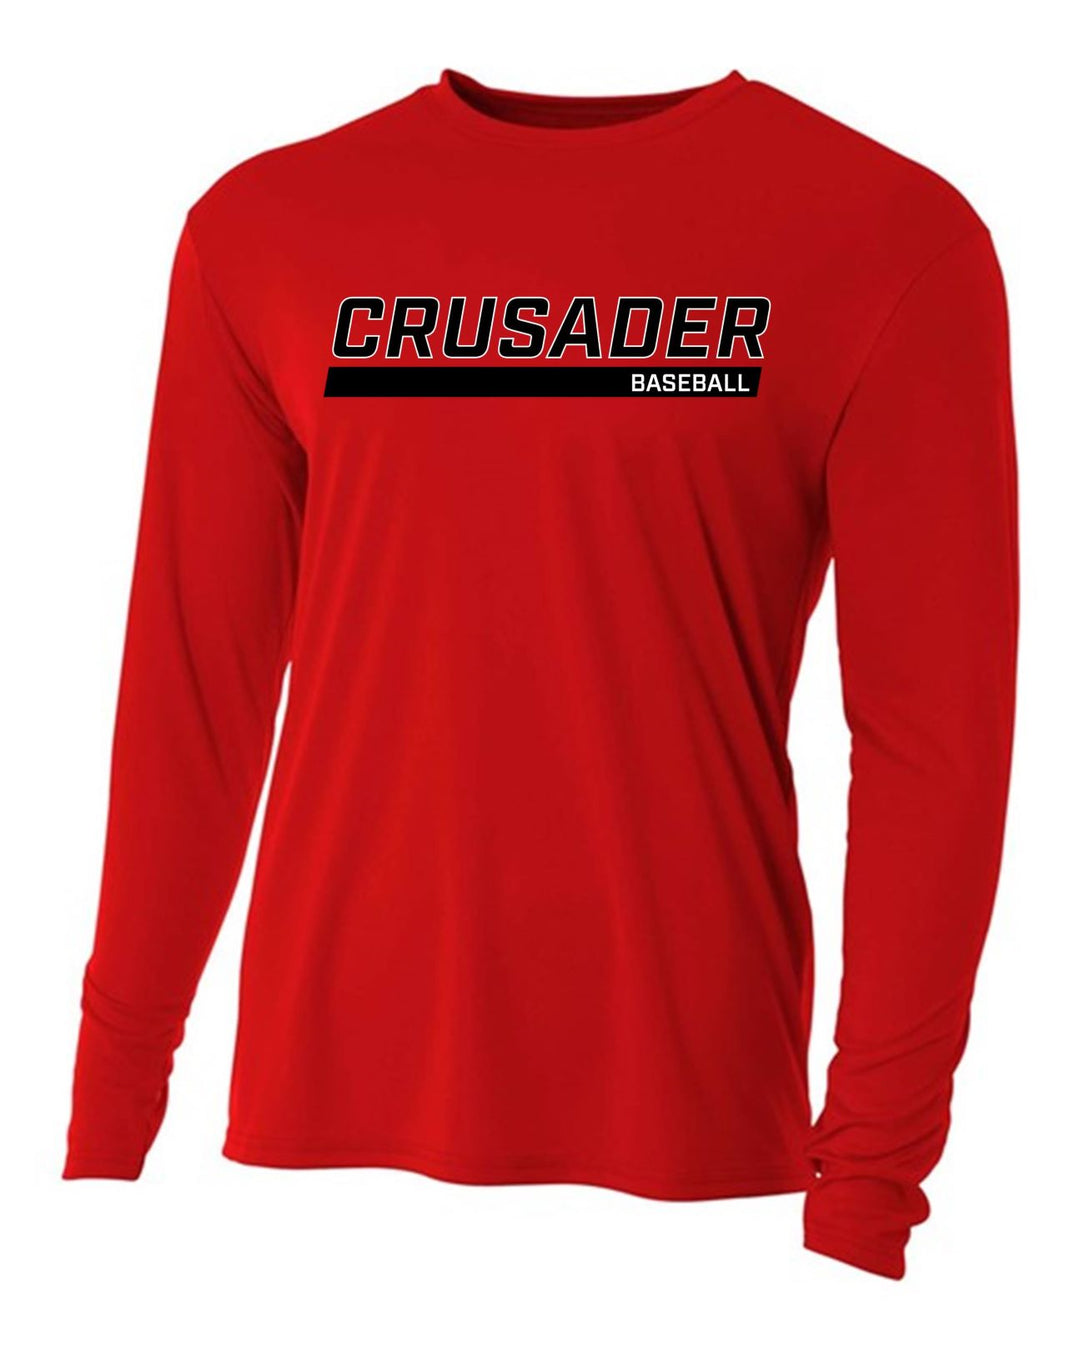 WCU Baseball Men's Long-Sleeve Performance Shirt WCU Baseball Red CRUSADER - Third Coast Soccer